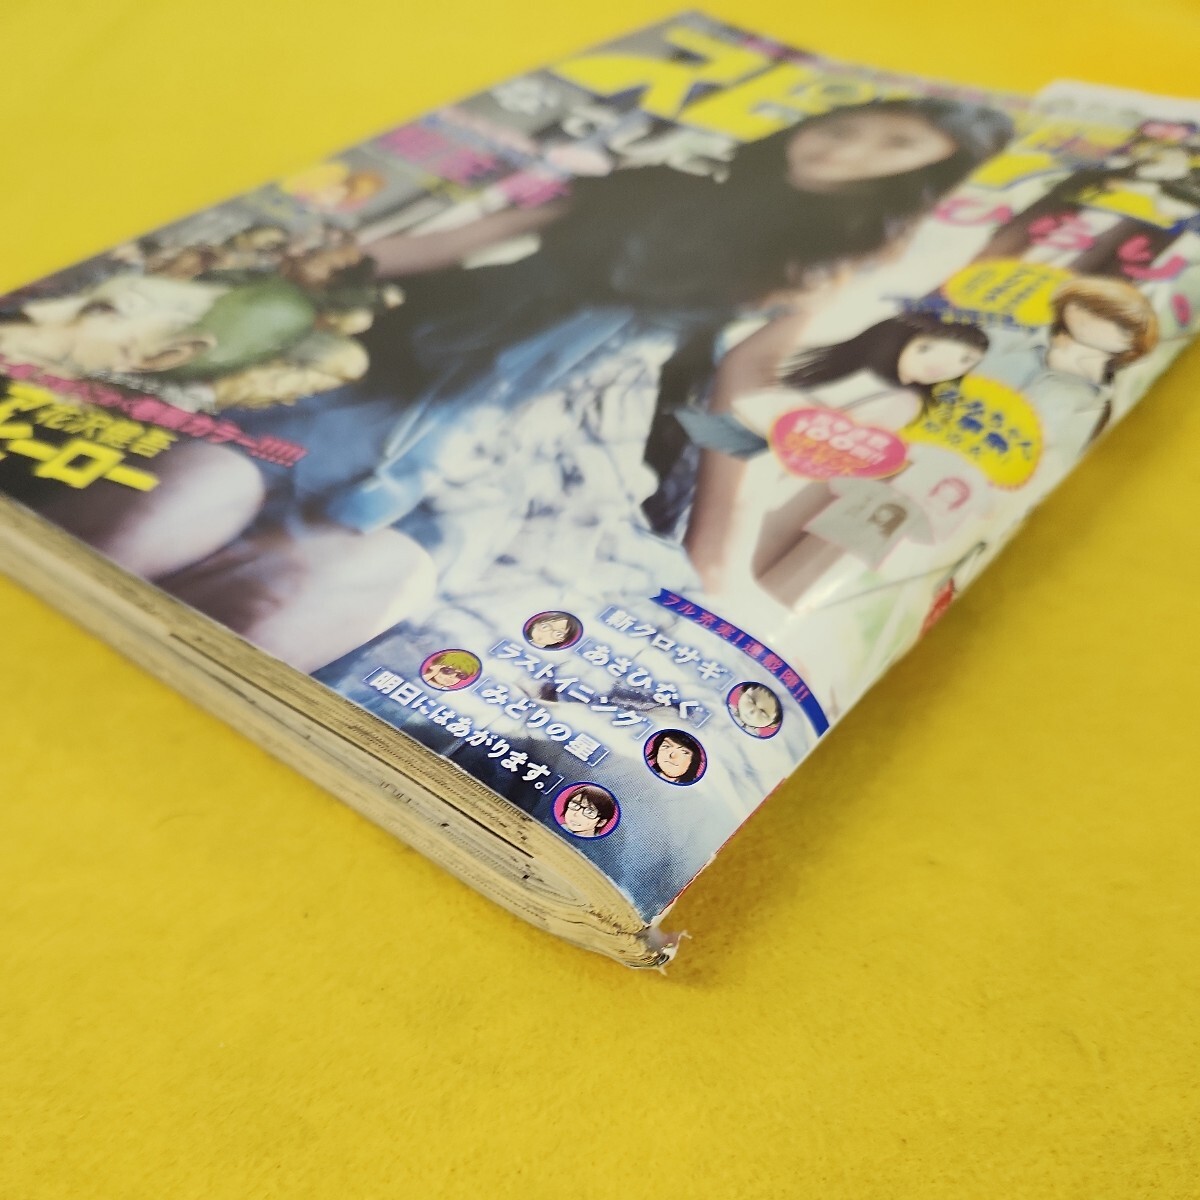 C52-074 週間スピリッツ 2013年6月17日号No.27 AKB48相笠萌 アイアムアヒーロー他 小学館 付録なし背表紙破れあり。_画像2